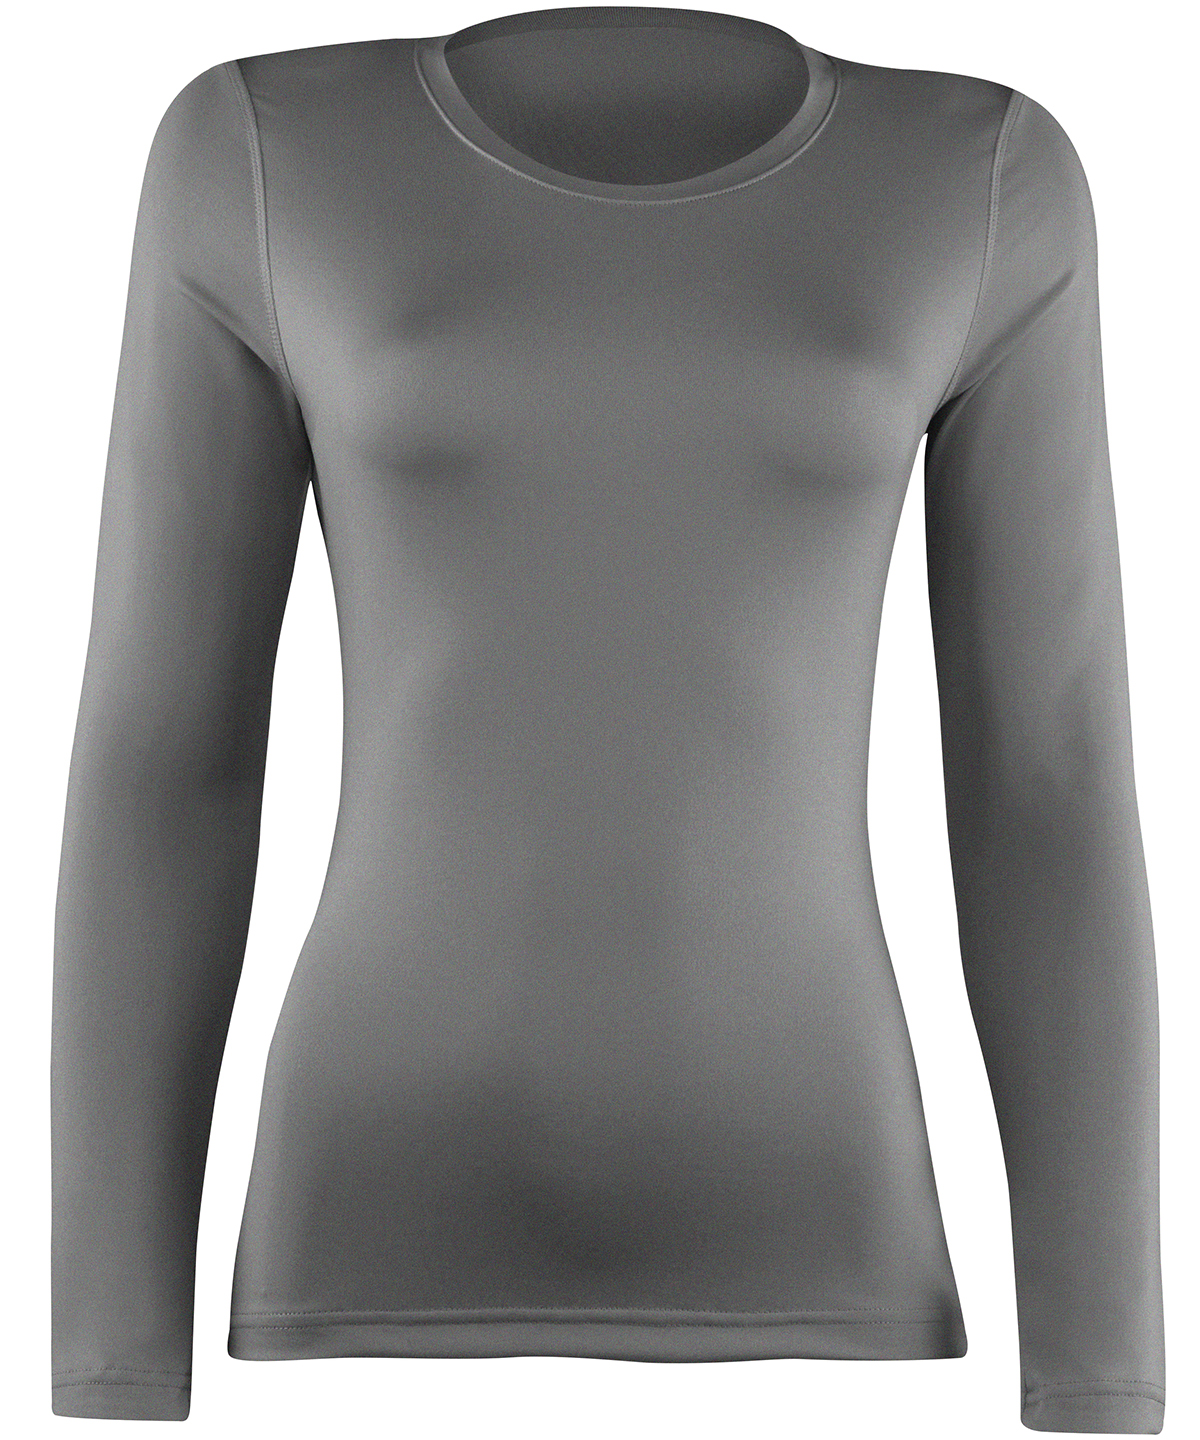 Rhino Women's Long Sleeve Baselayer T-Shirt RH003 -Ladies Gym Fitness Sports  Top